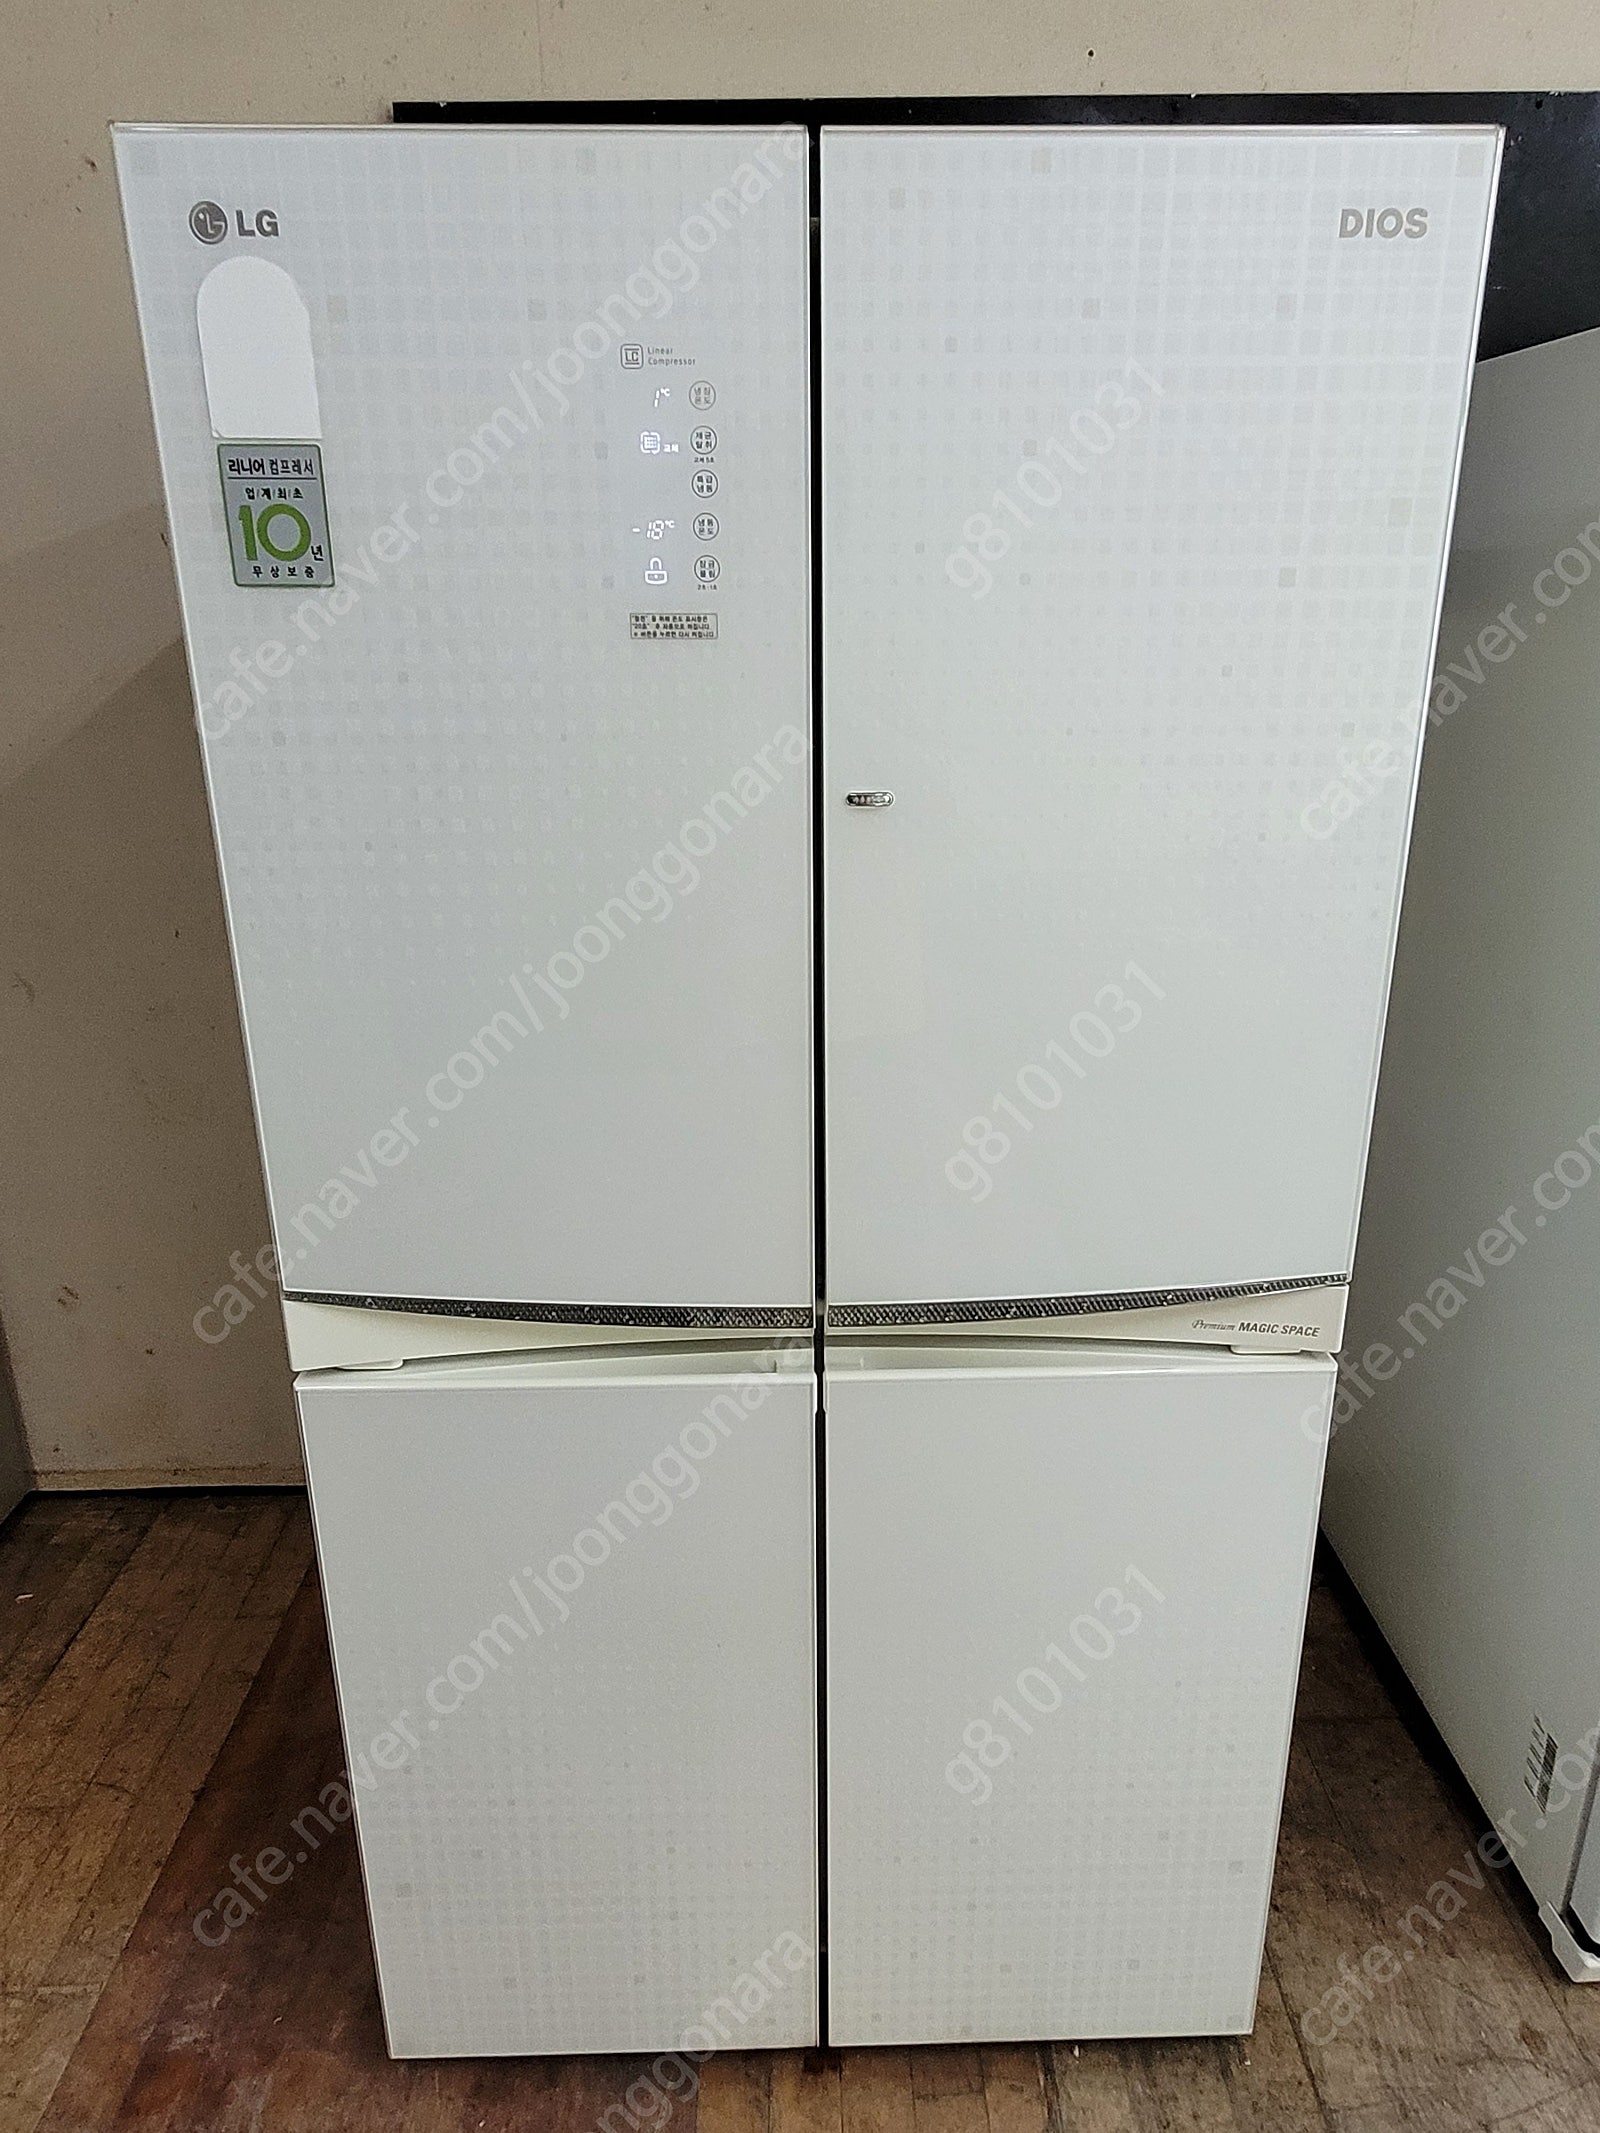 LG 4도어 양문형 냉장고 판매합니다.